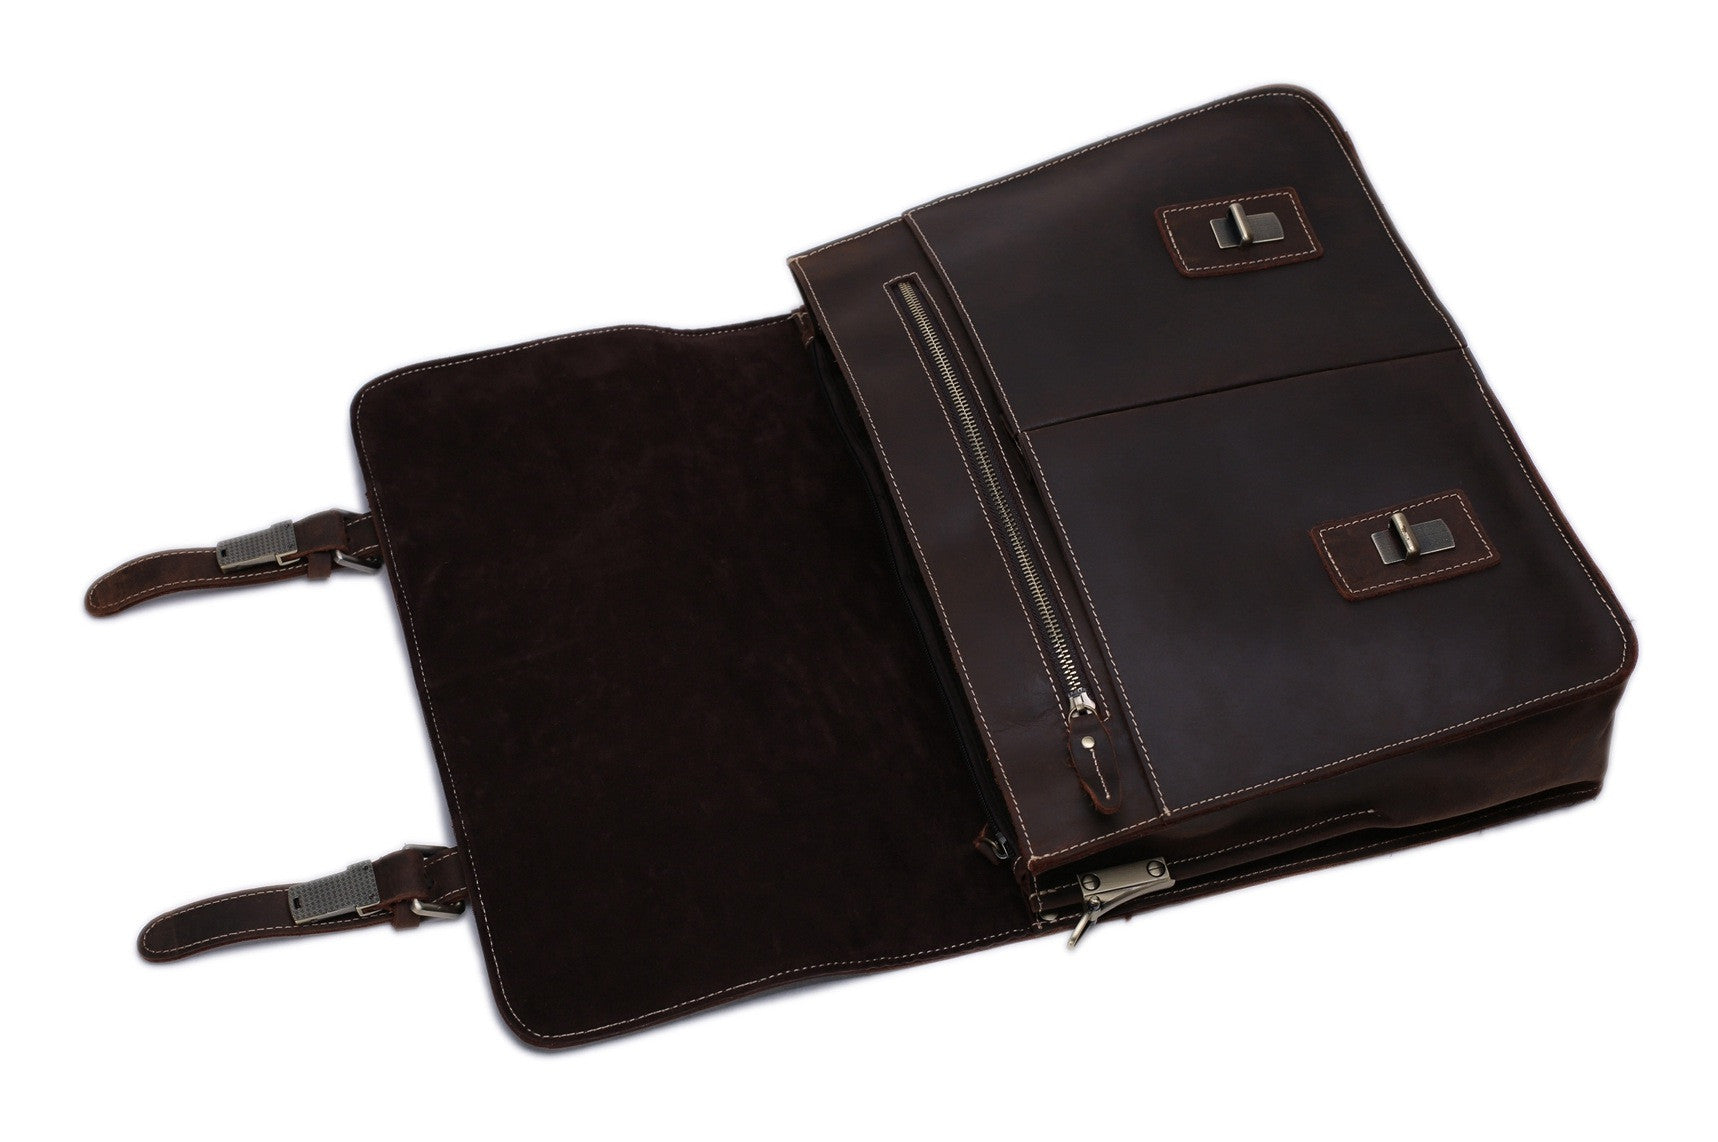 Vintage Style Natural grain Leather Men's Briefcase - itechitrek